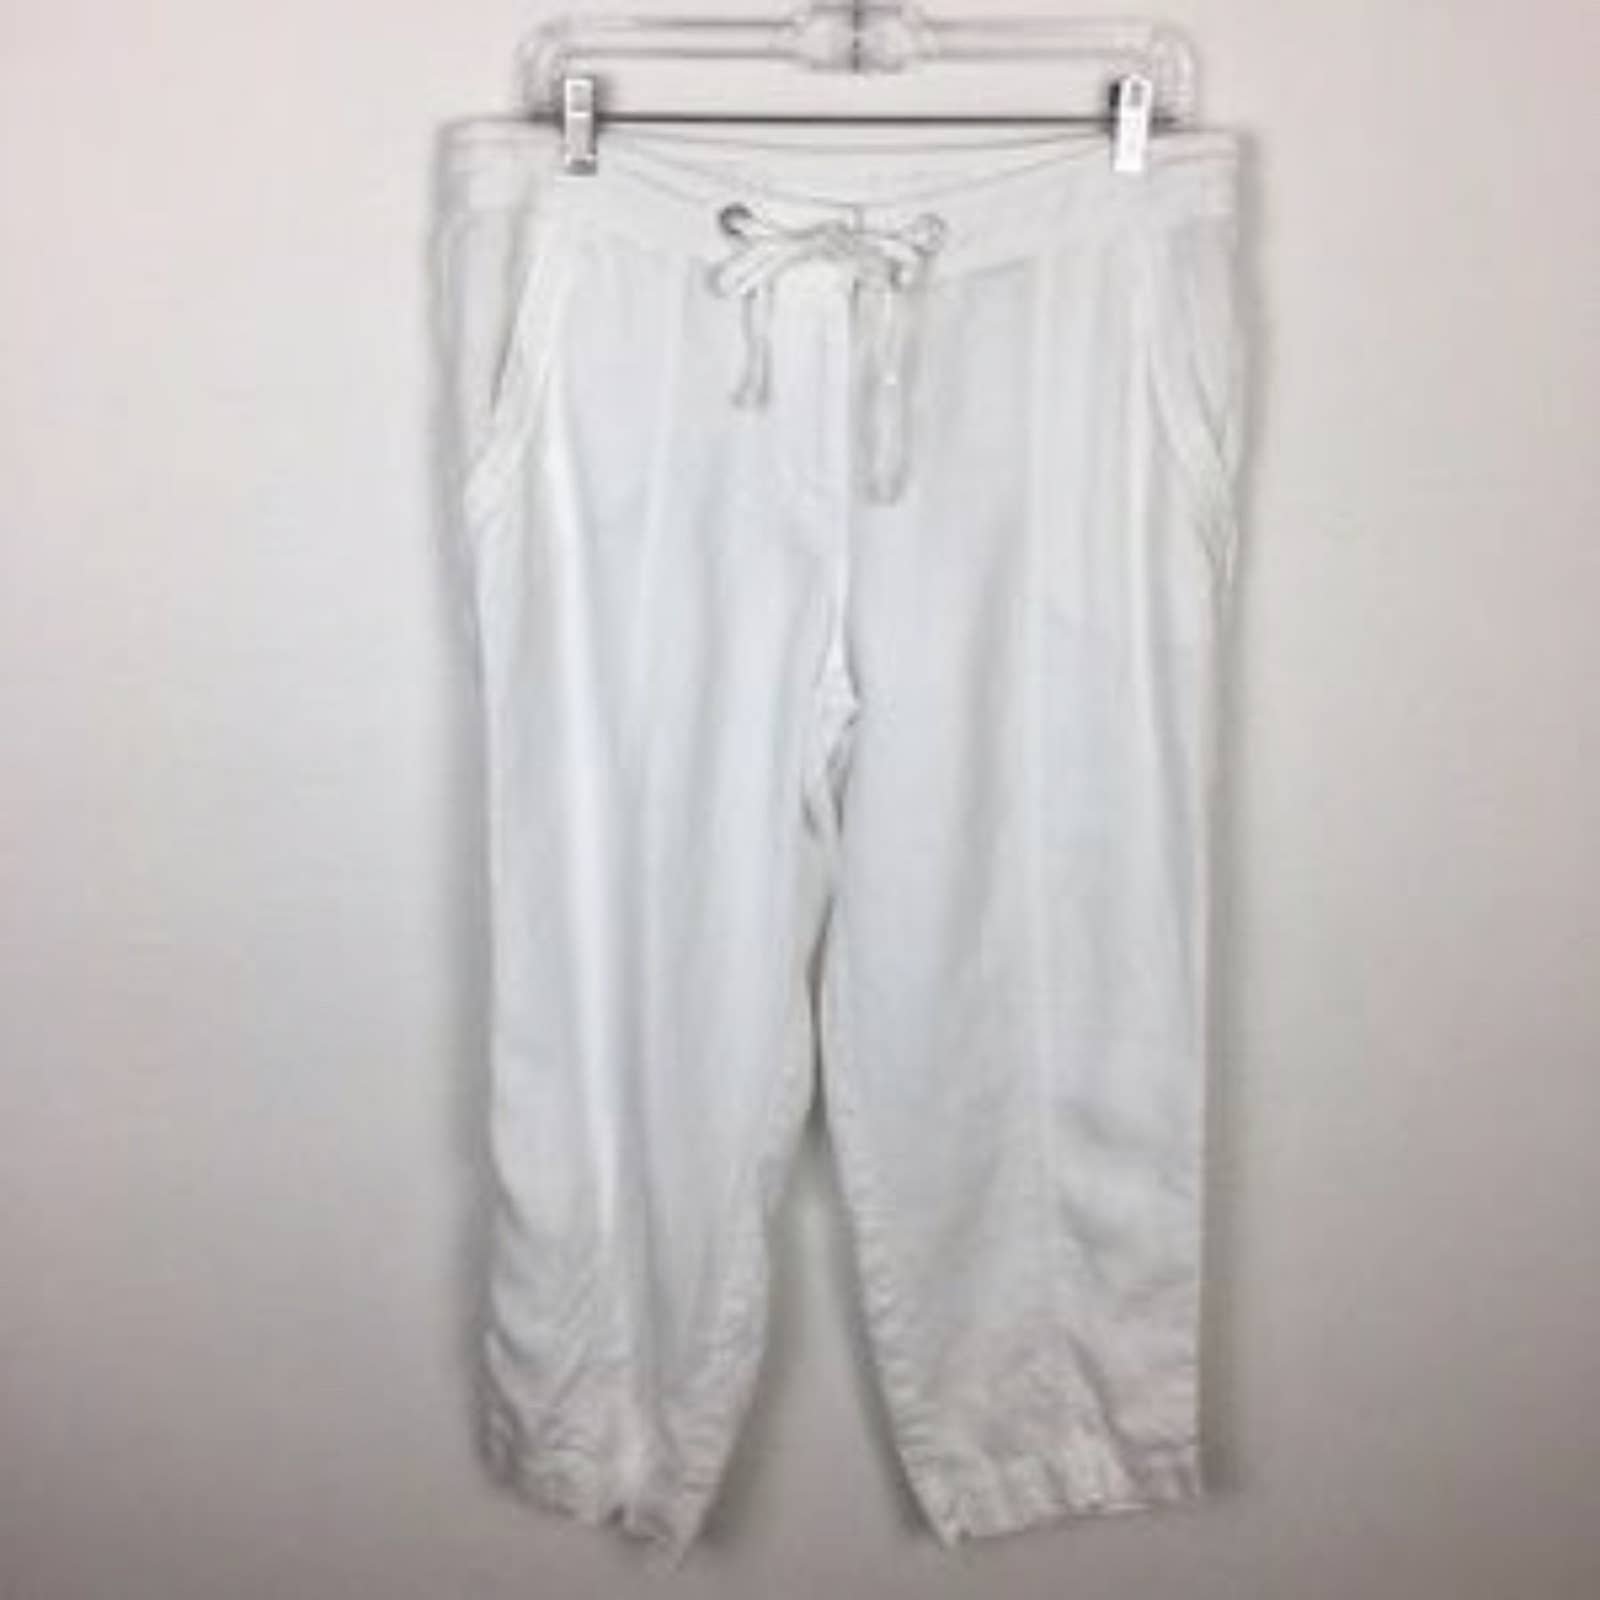 Popular Tommy Bahama White Linen Crop Pants size 10 LfIIK0QwC well sale